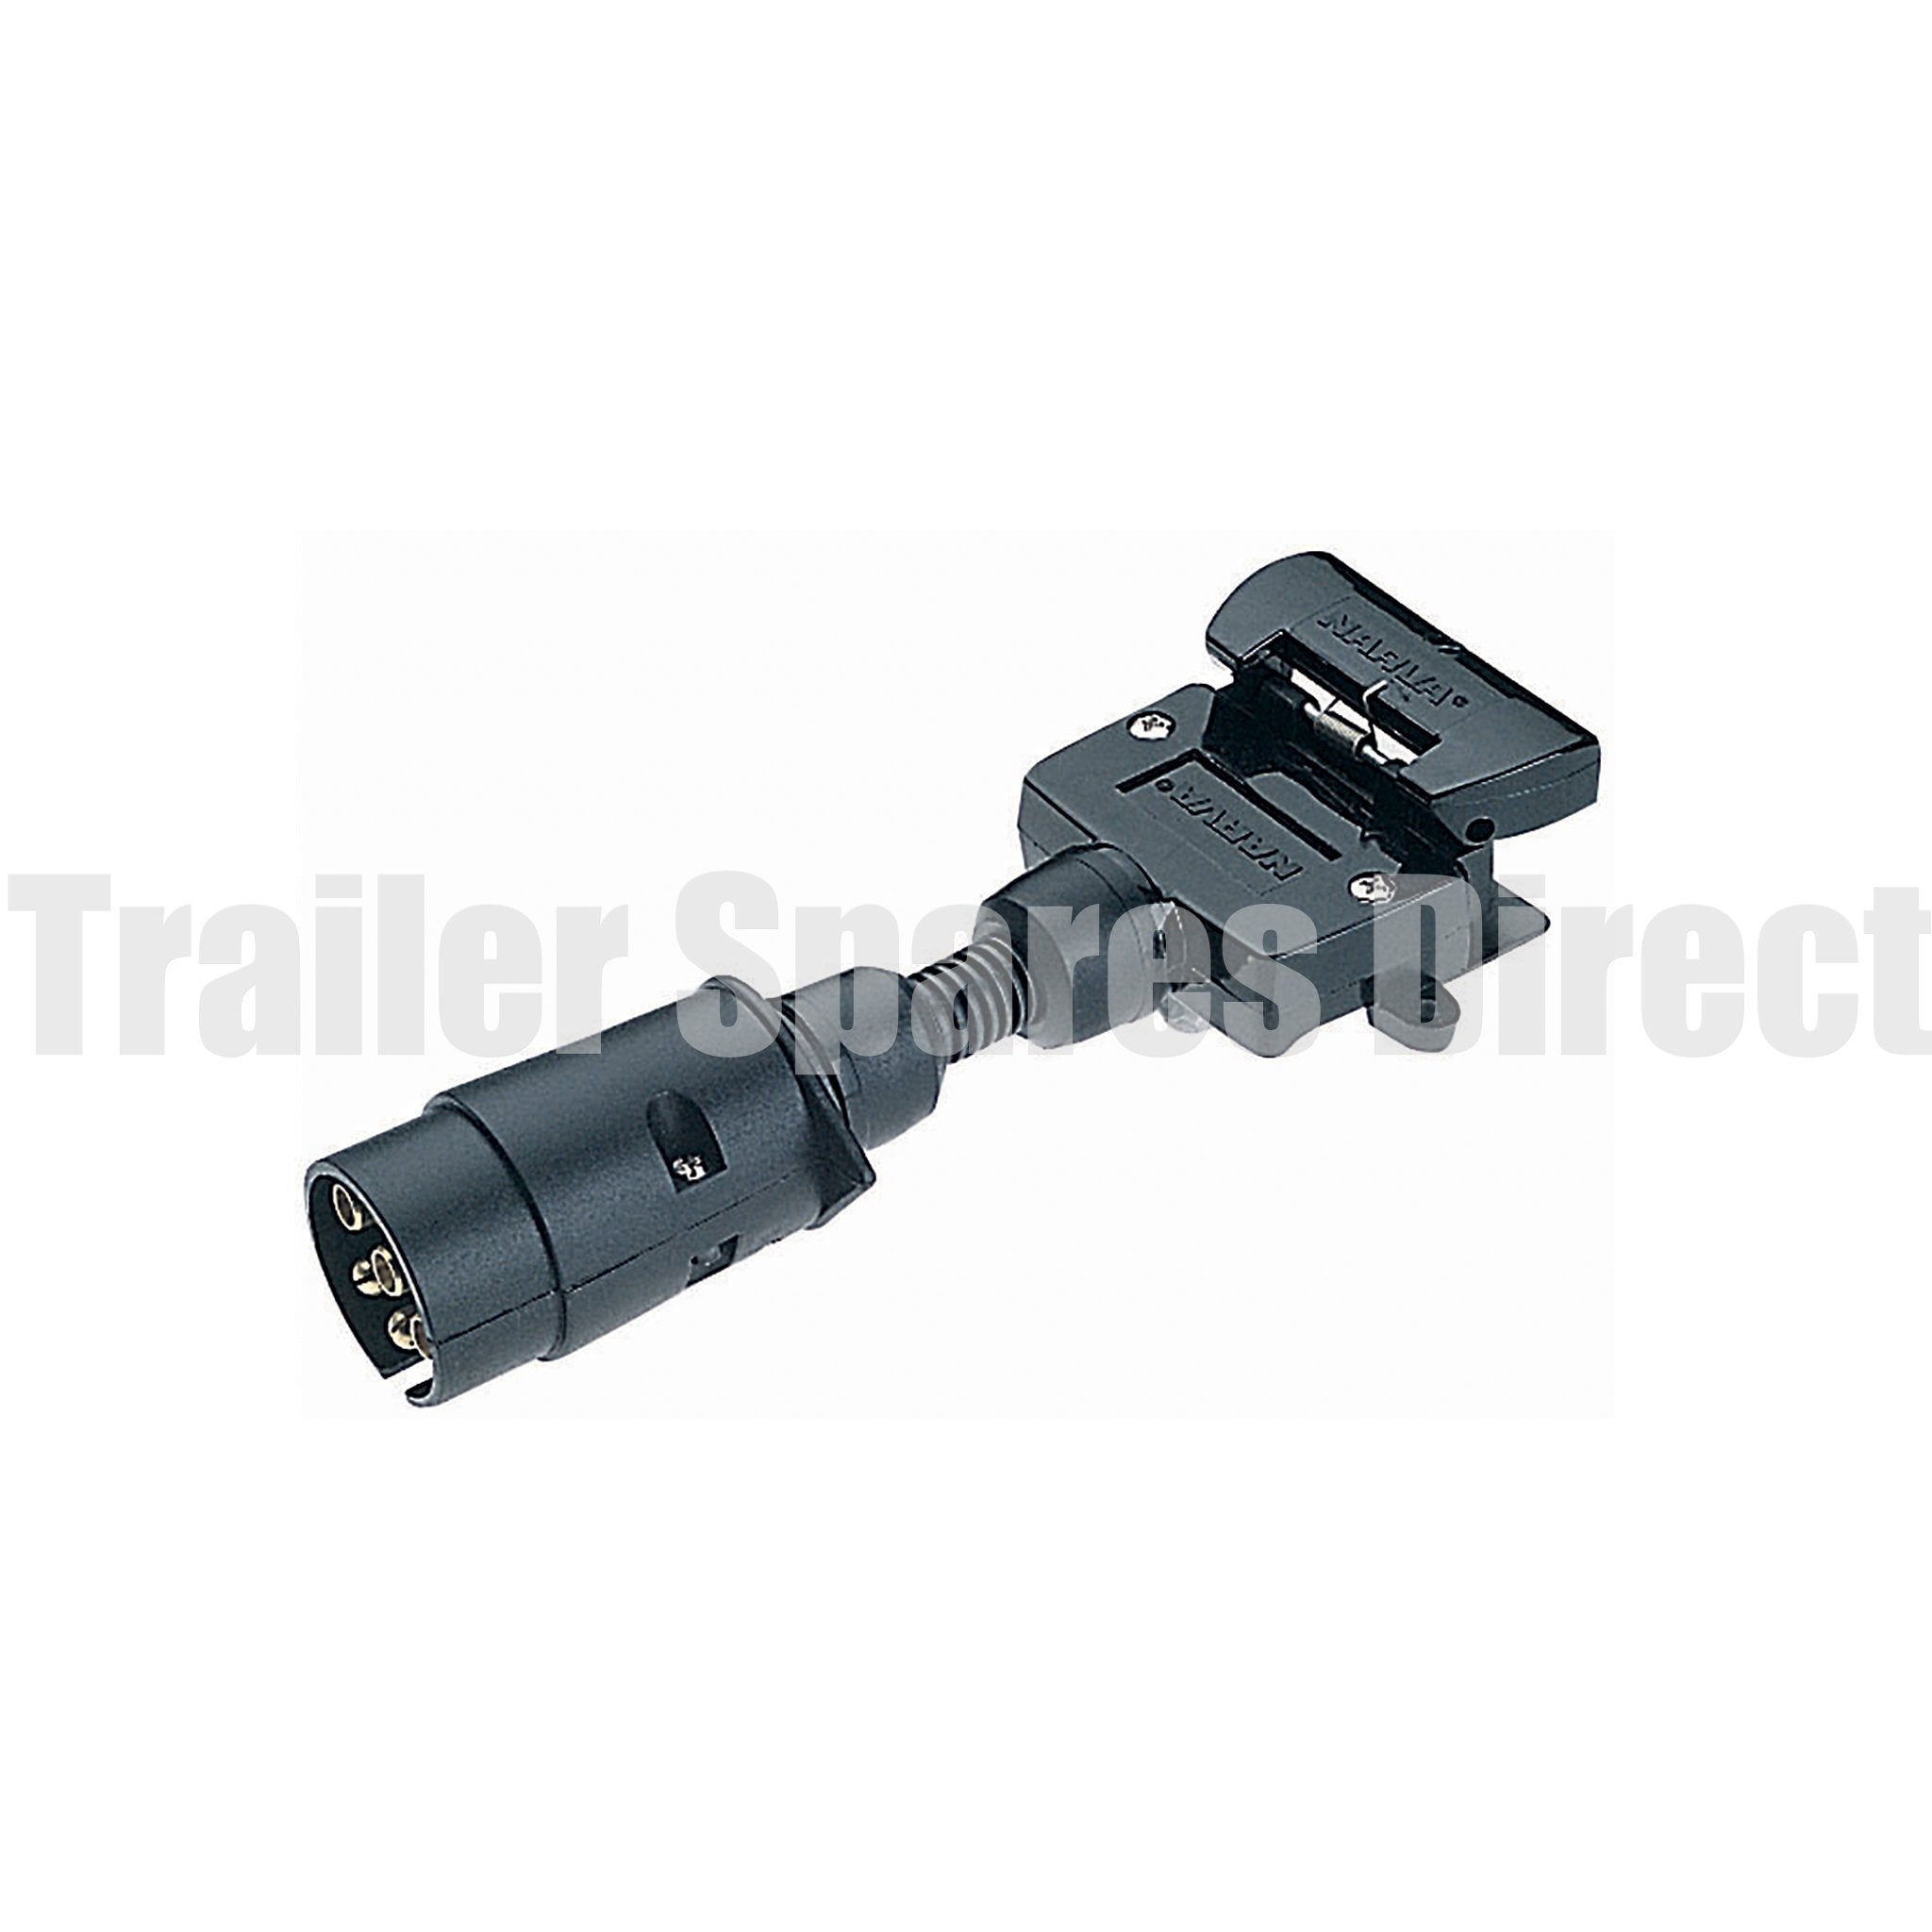 adapter 7 pin large round socket - 7 pin flat plug